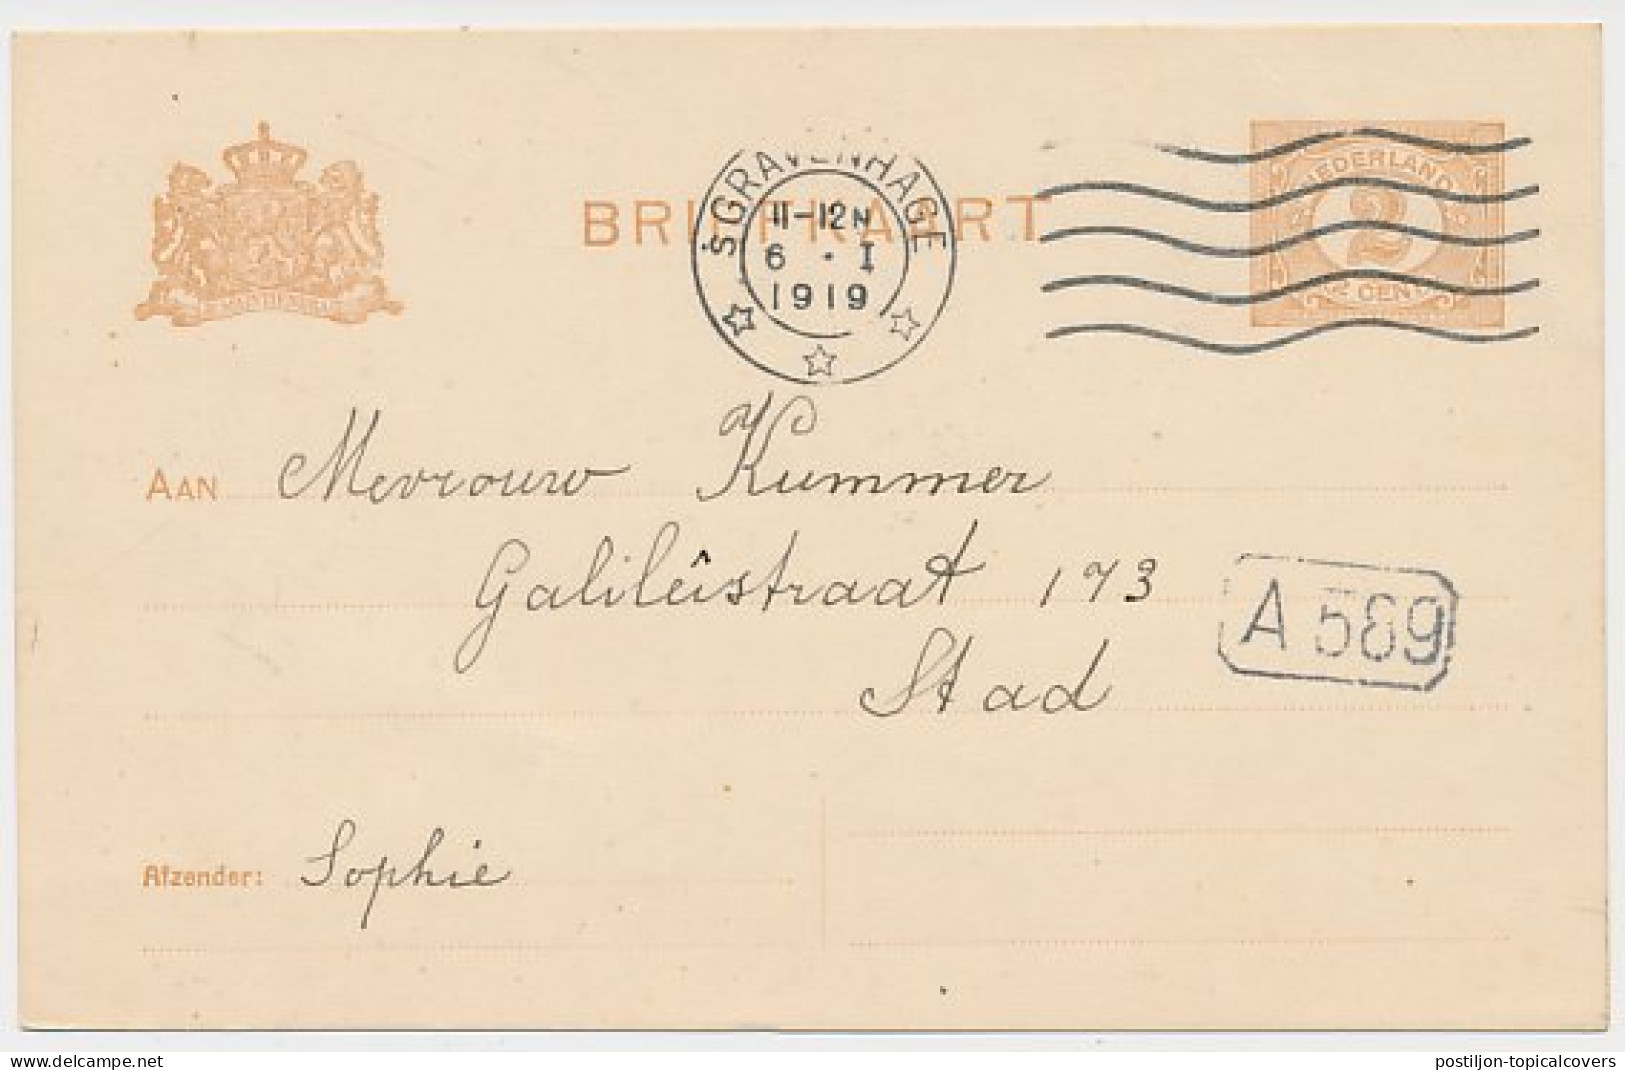 Briefkaart G. 88 A II Locaal Te S Gravenhage 1919 - Entiers Postaux